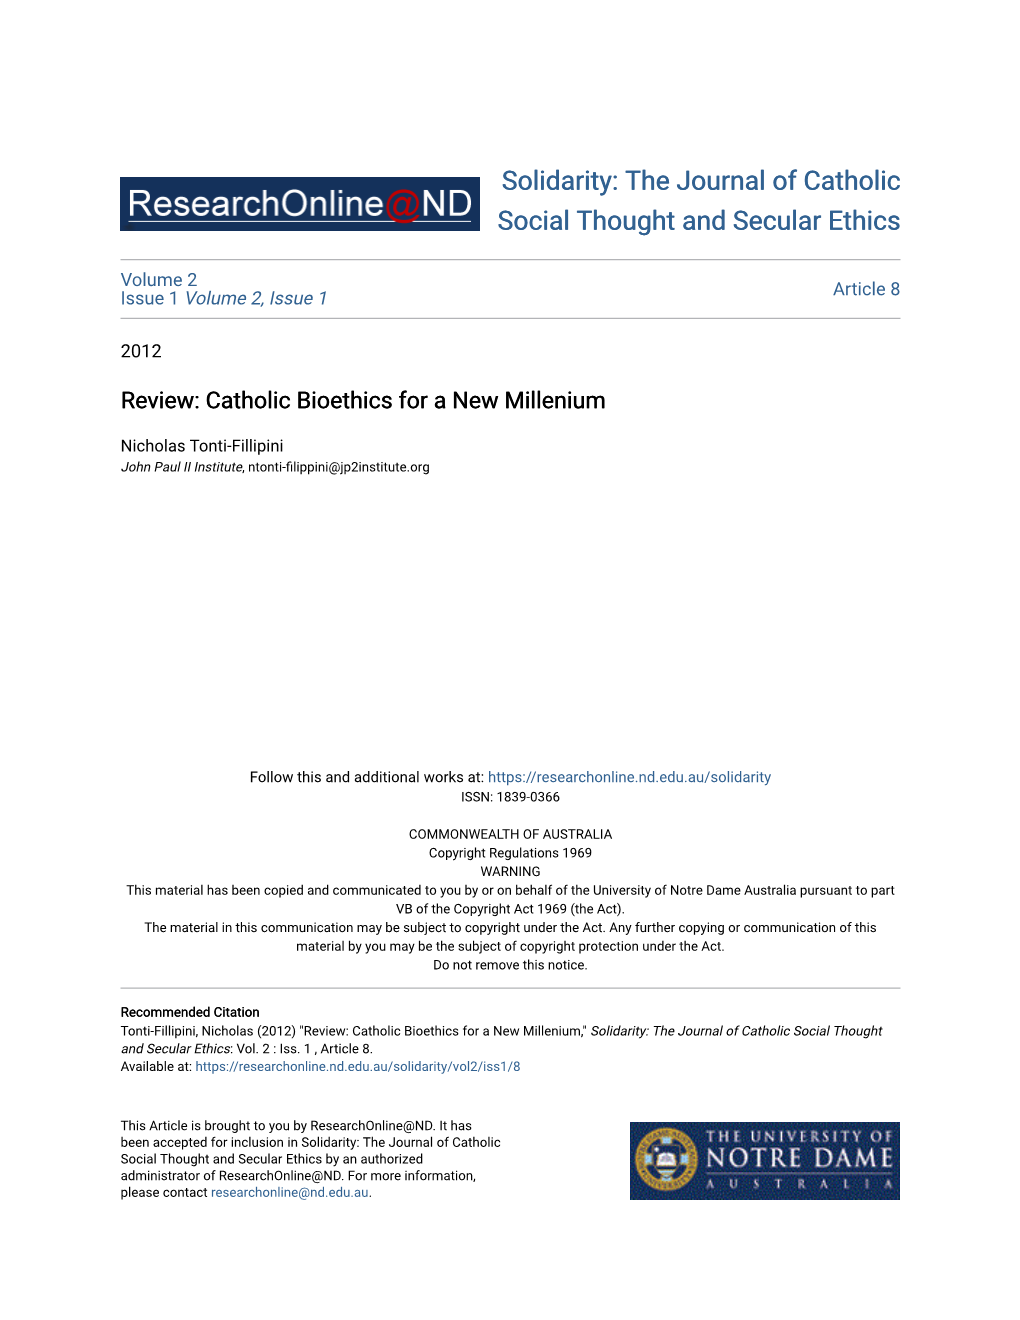 Catholic Bioethics for a New Millenium